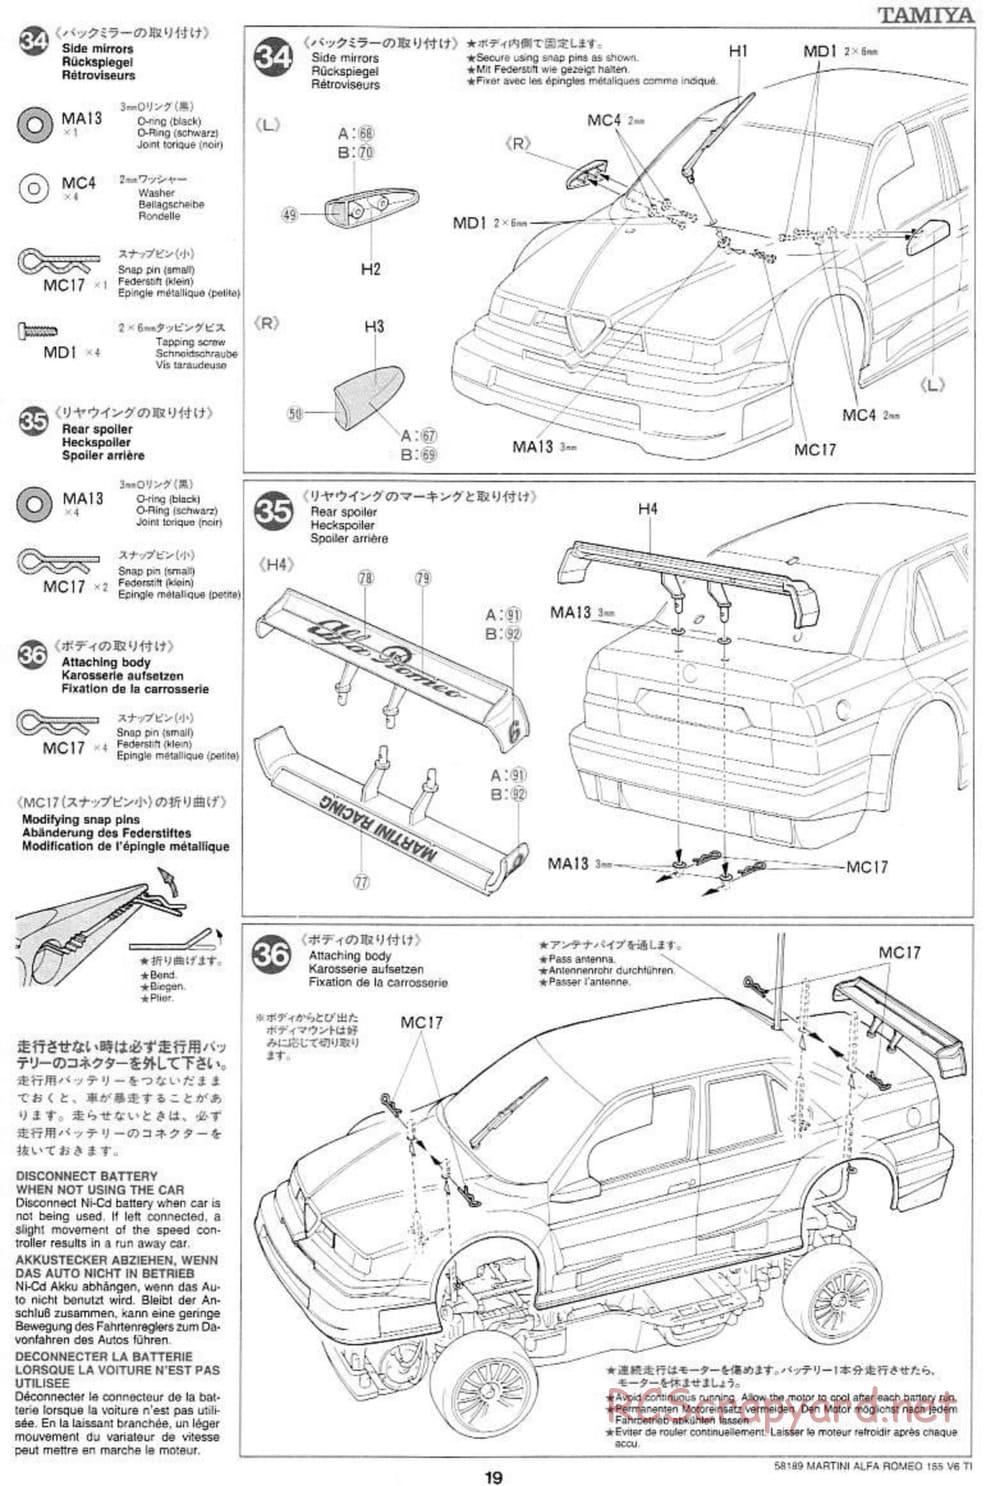 Tamiya - Martini Alfa Romeo 155 V6 TI - TA-03F Chassis - Manual - Page 19